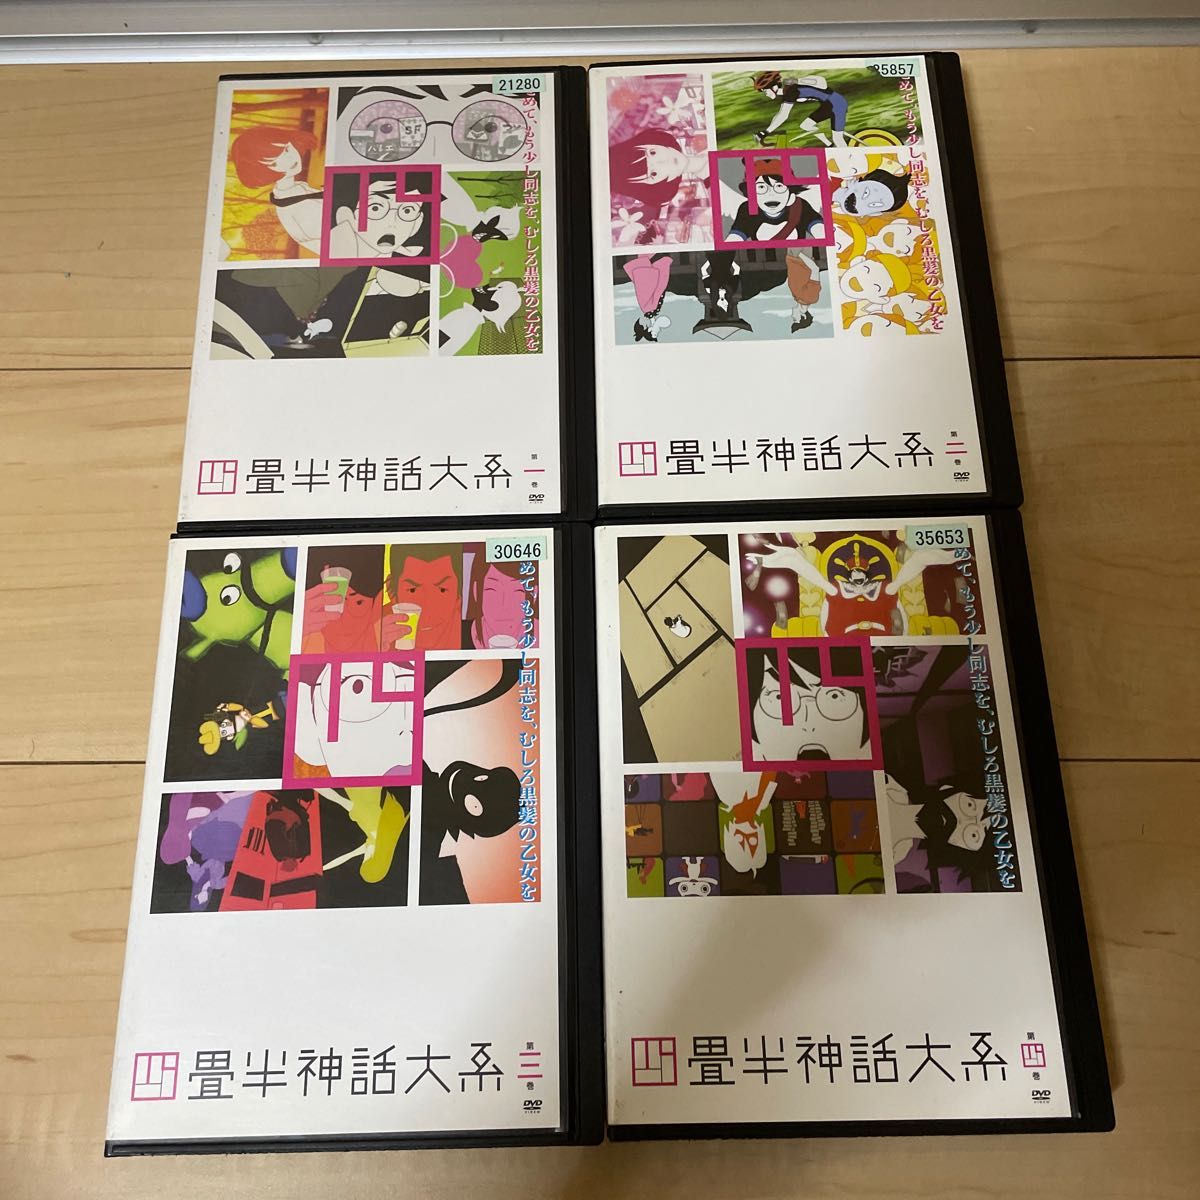 四畳半神話大系【DVD】全4巻セット